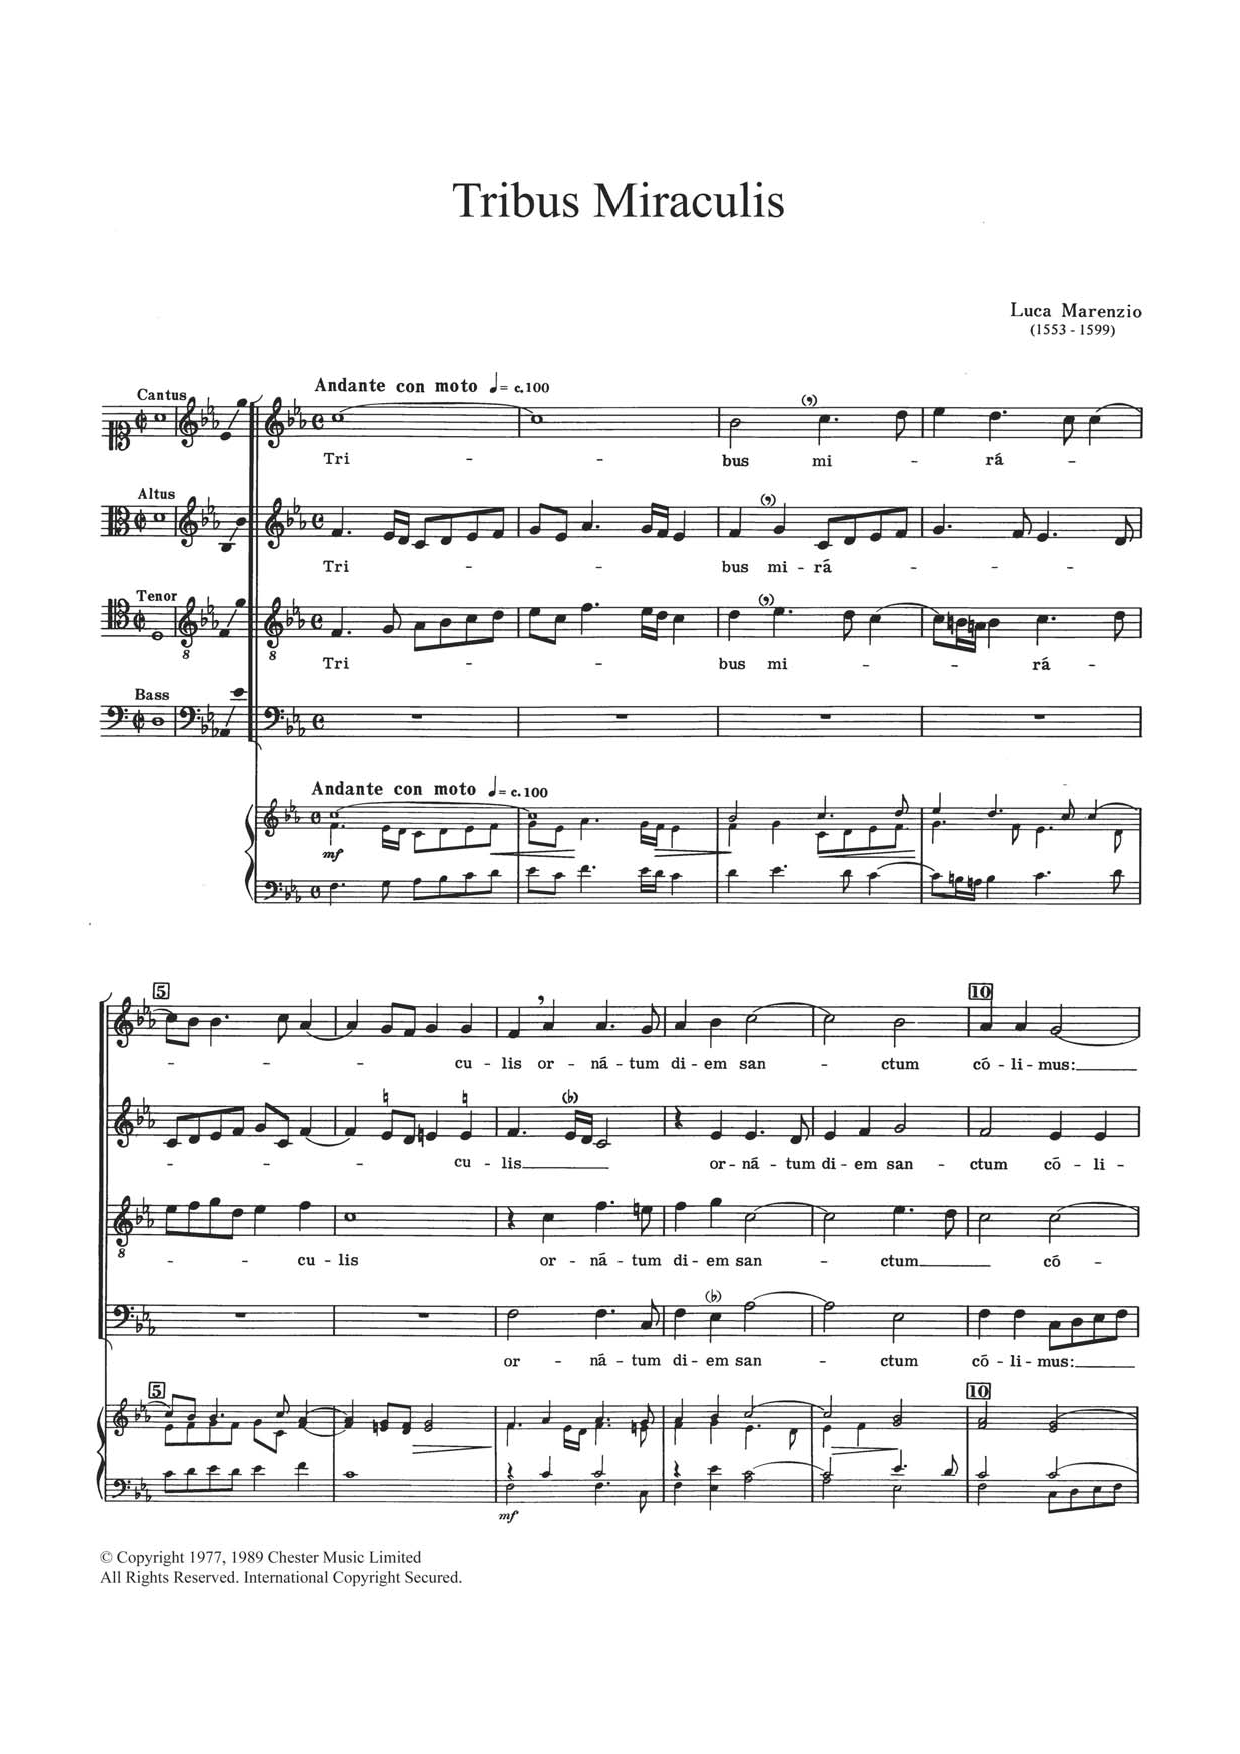 Luca Marenzio Tribus Miraculis Sheet Music Notes & Chords for Choir - Download or Print PDF